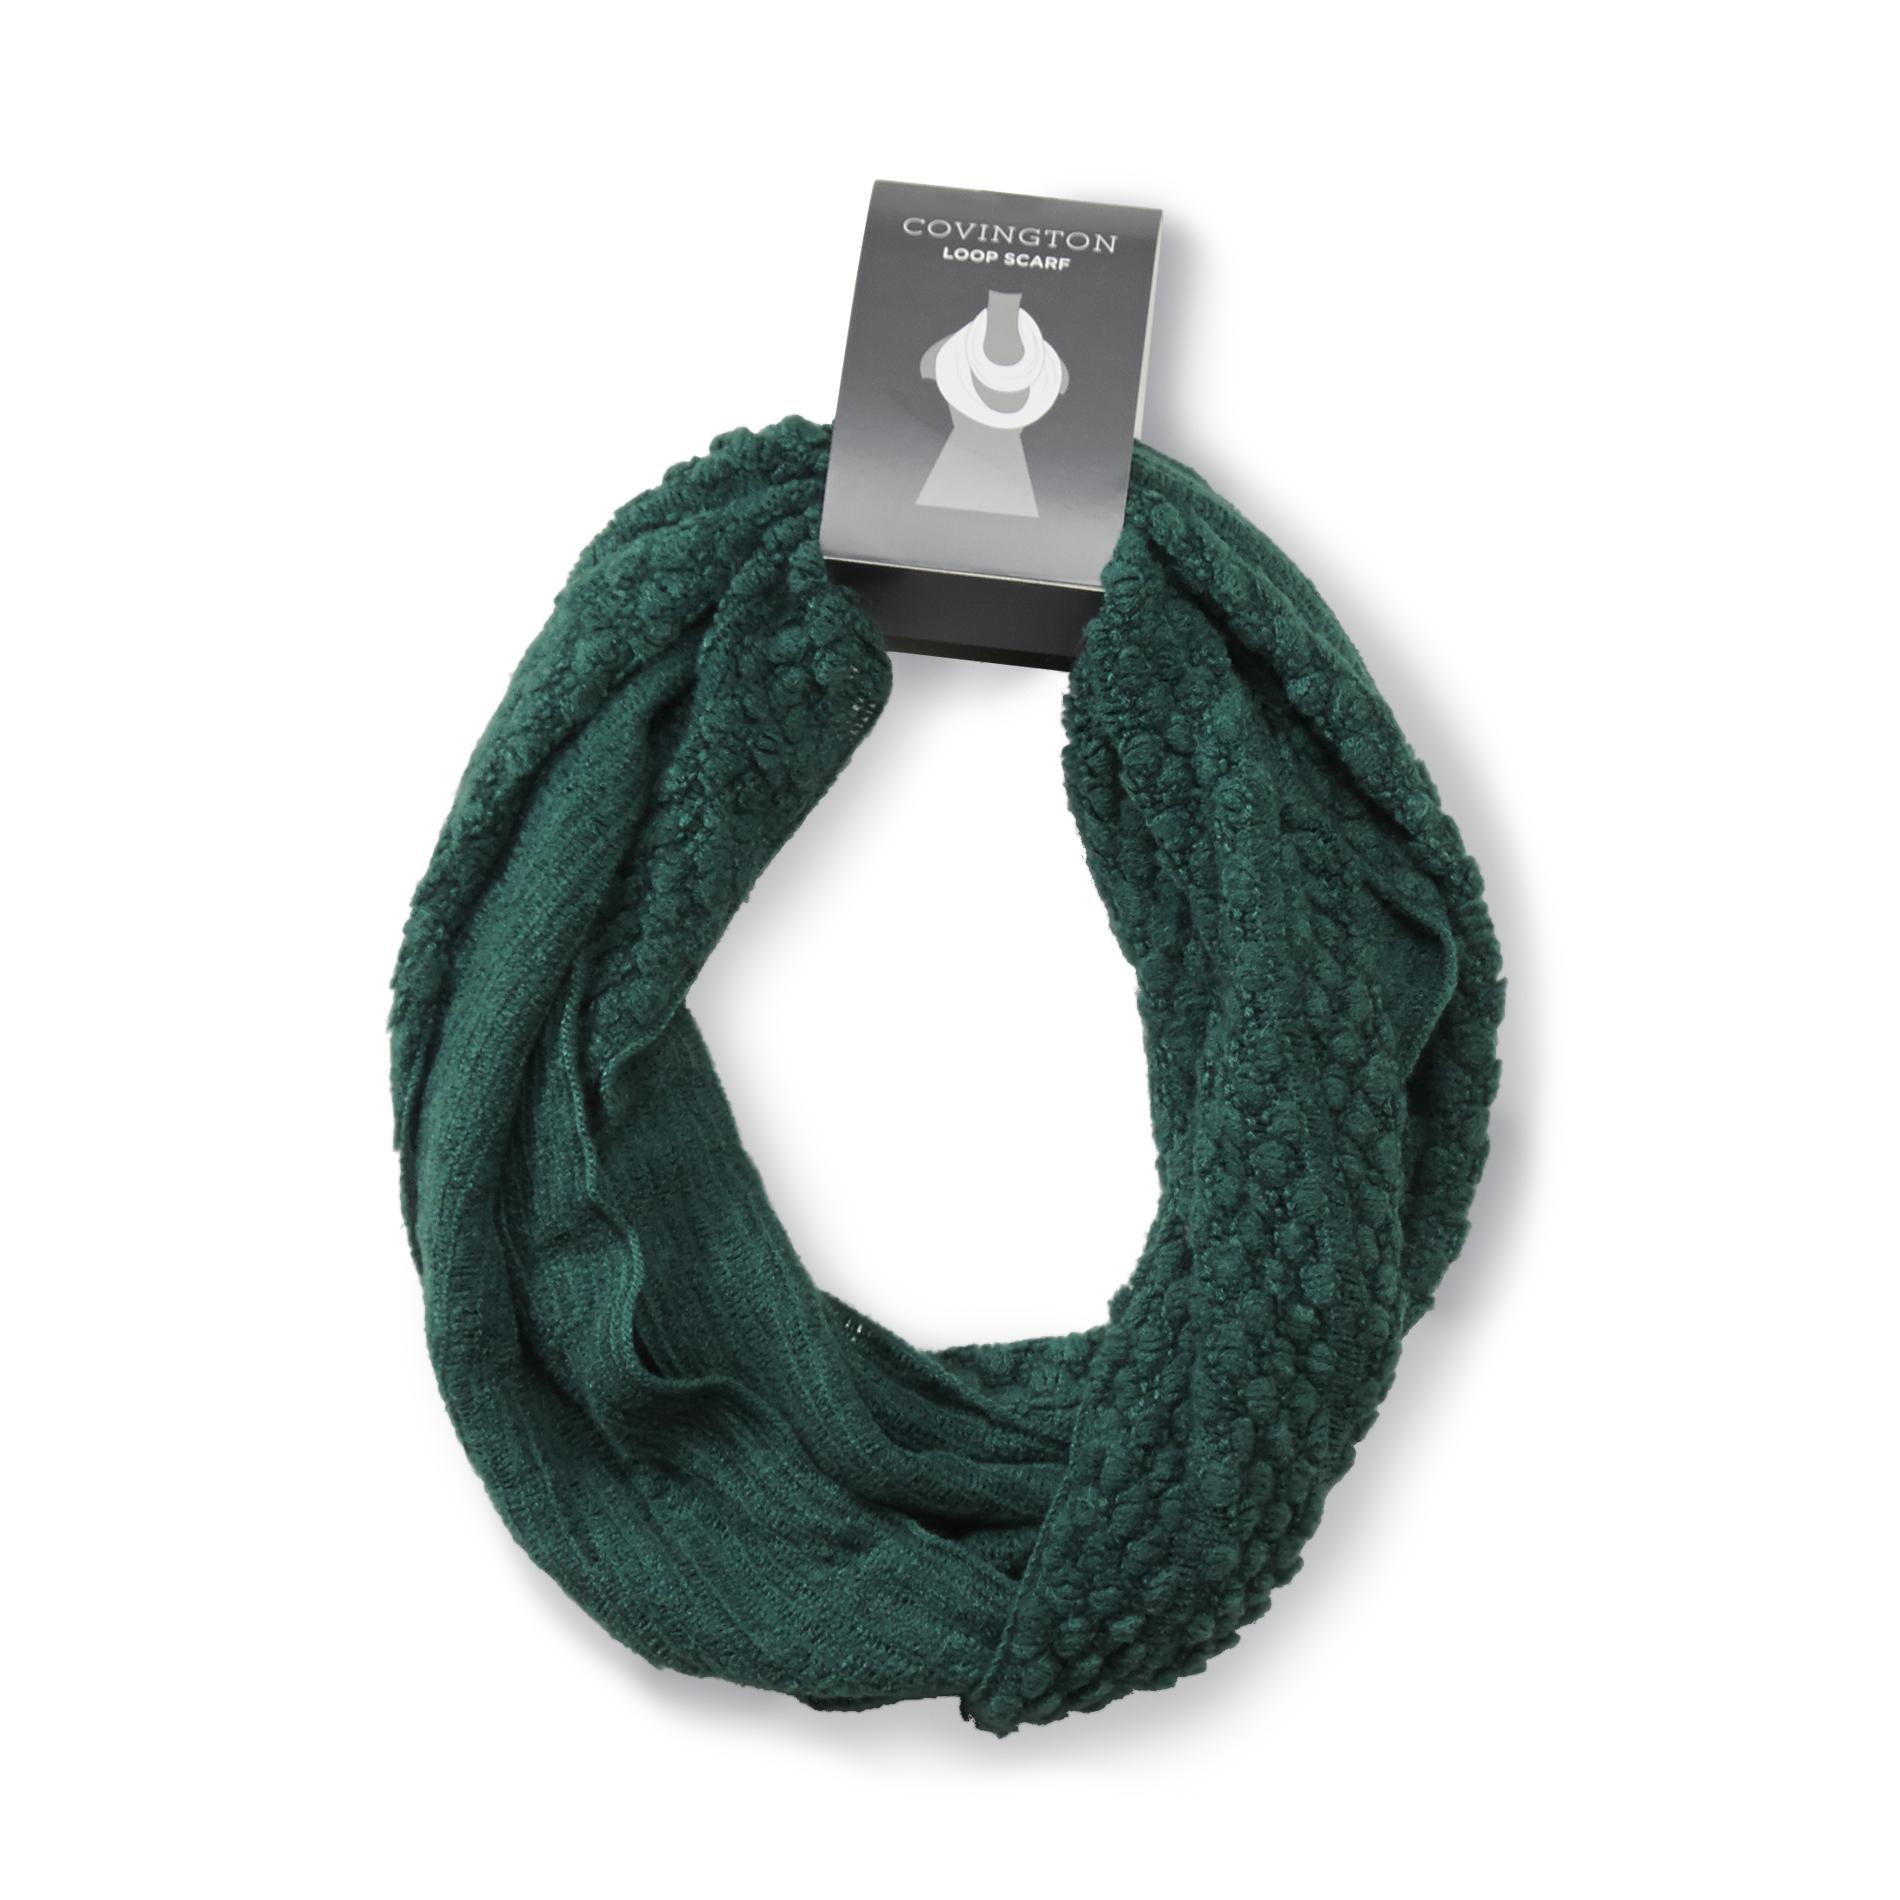 Metaphor Women's Knit Infinity Scarf